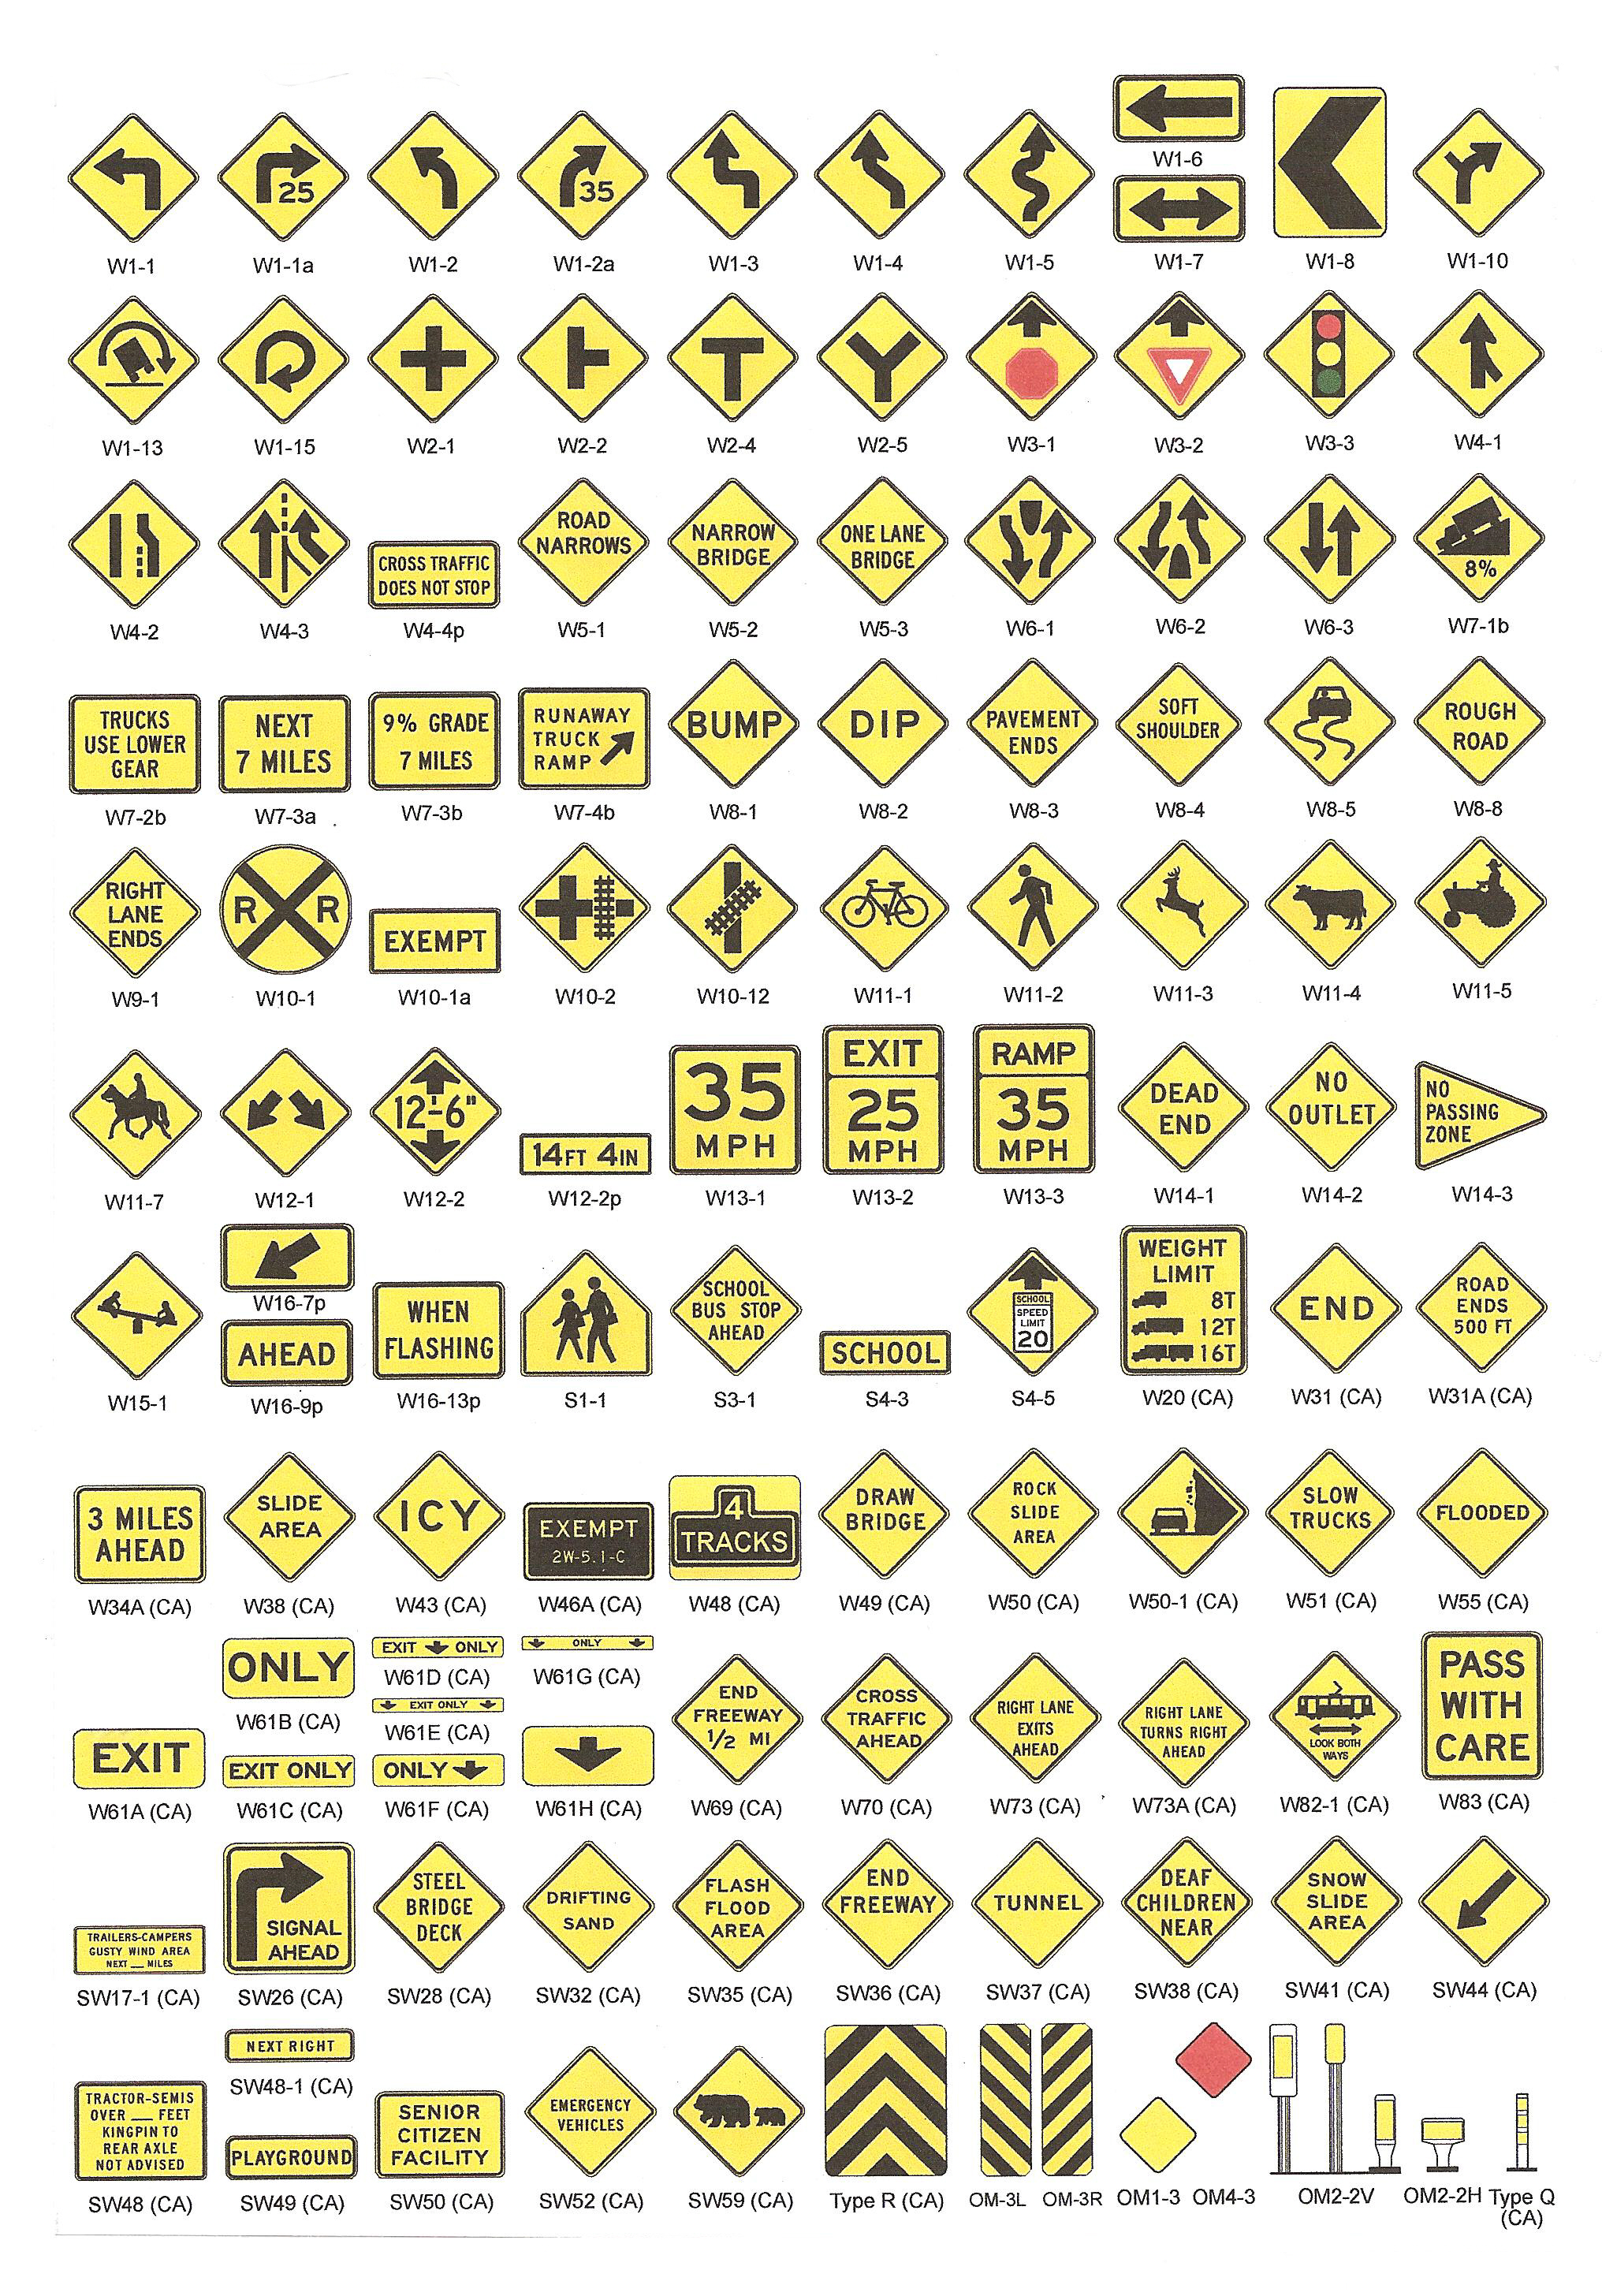 Free Road Danger Signs, Download Free Road Danger Signs png images